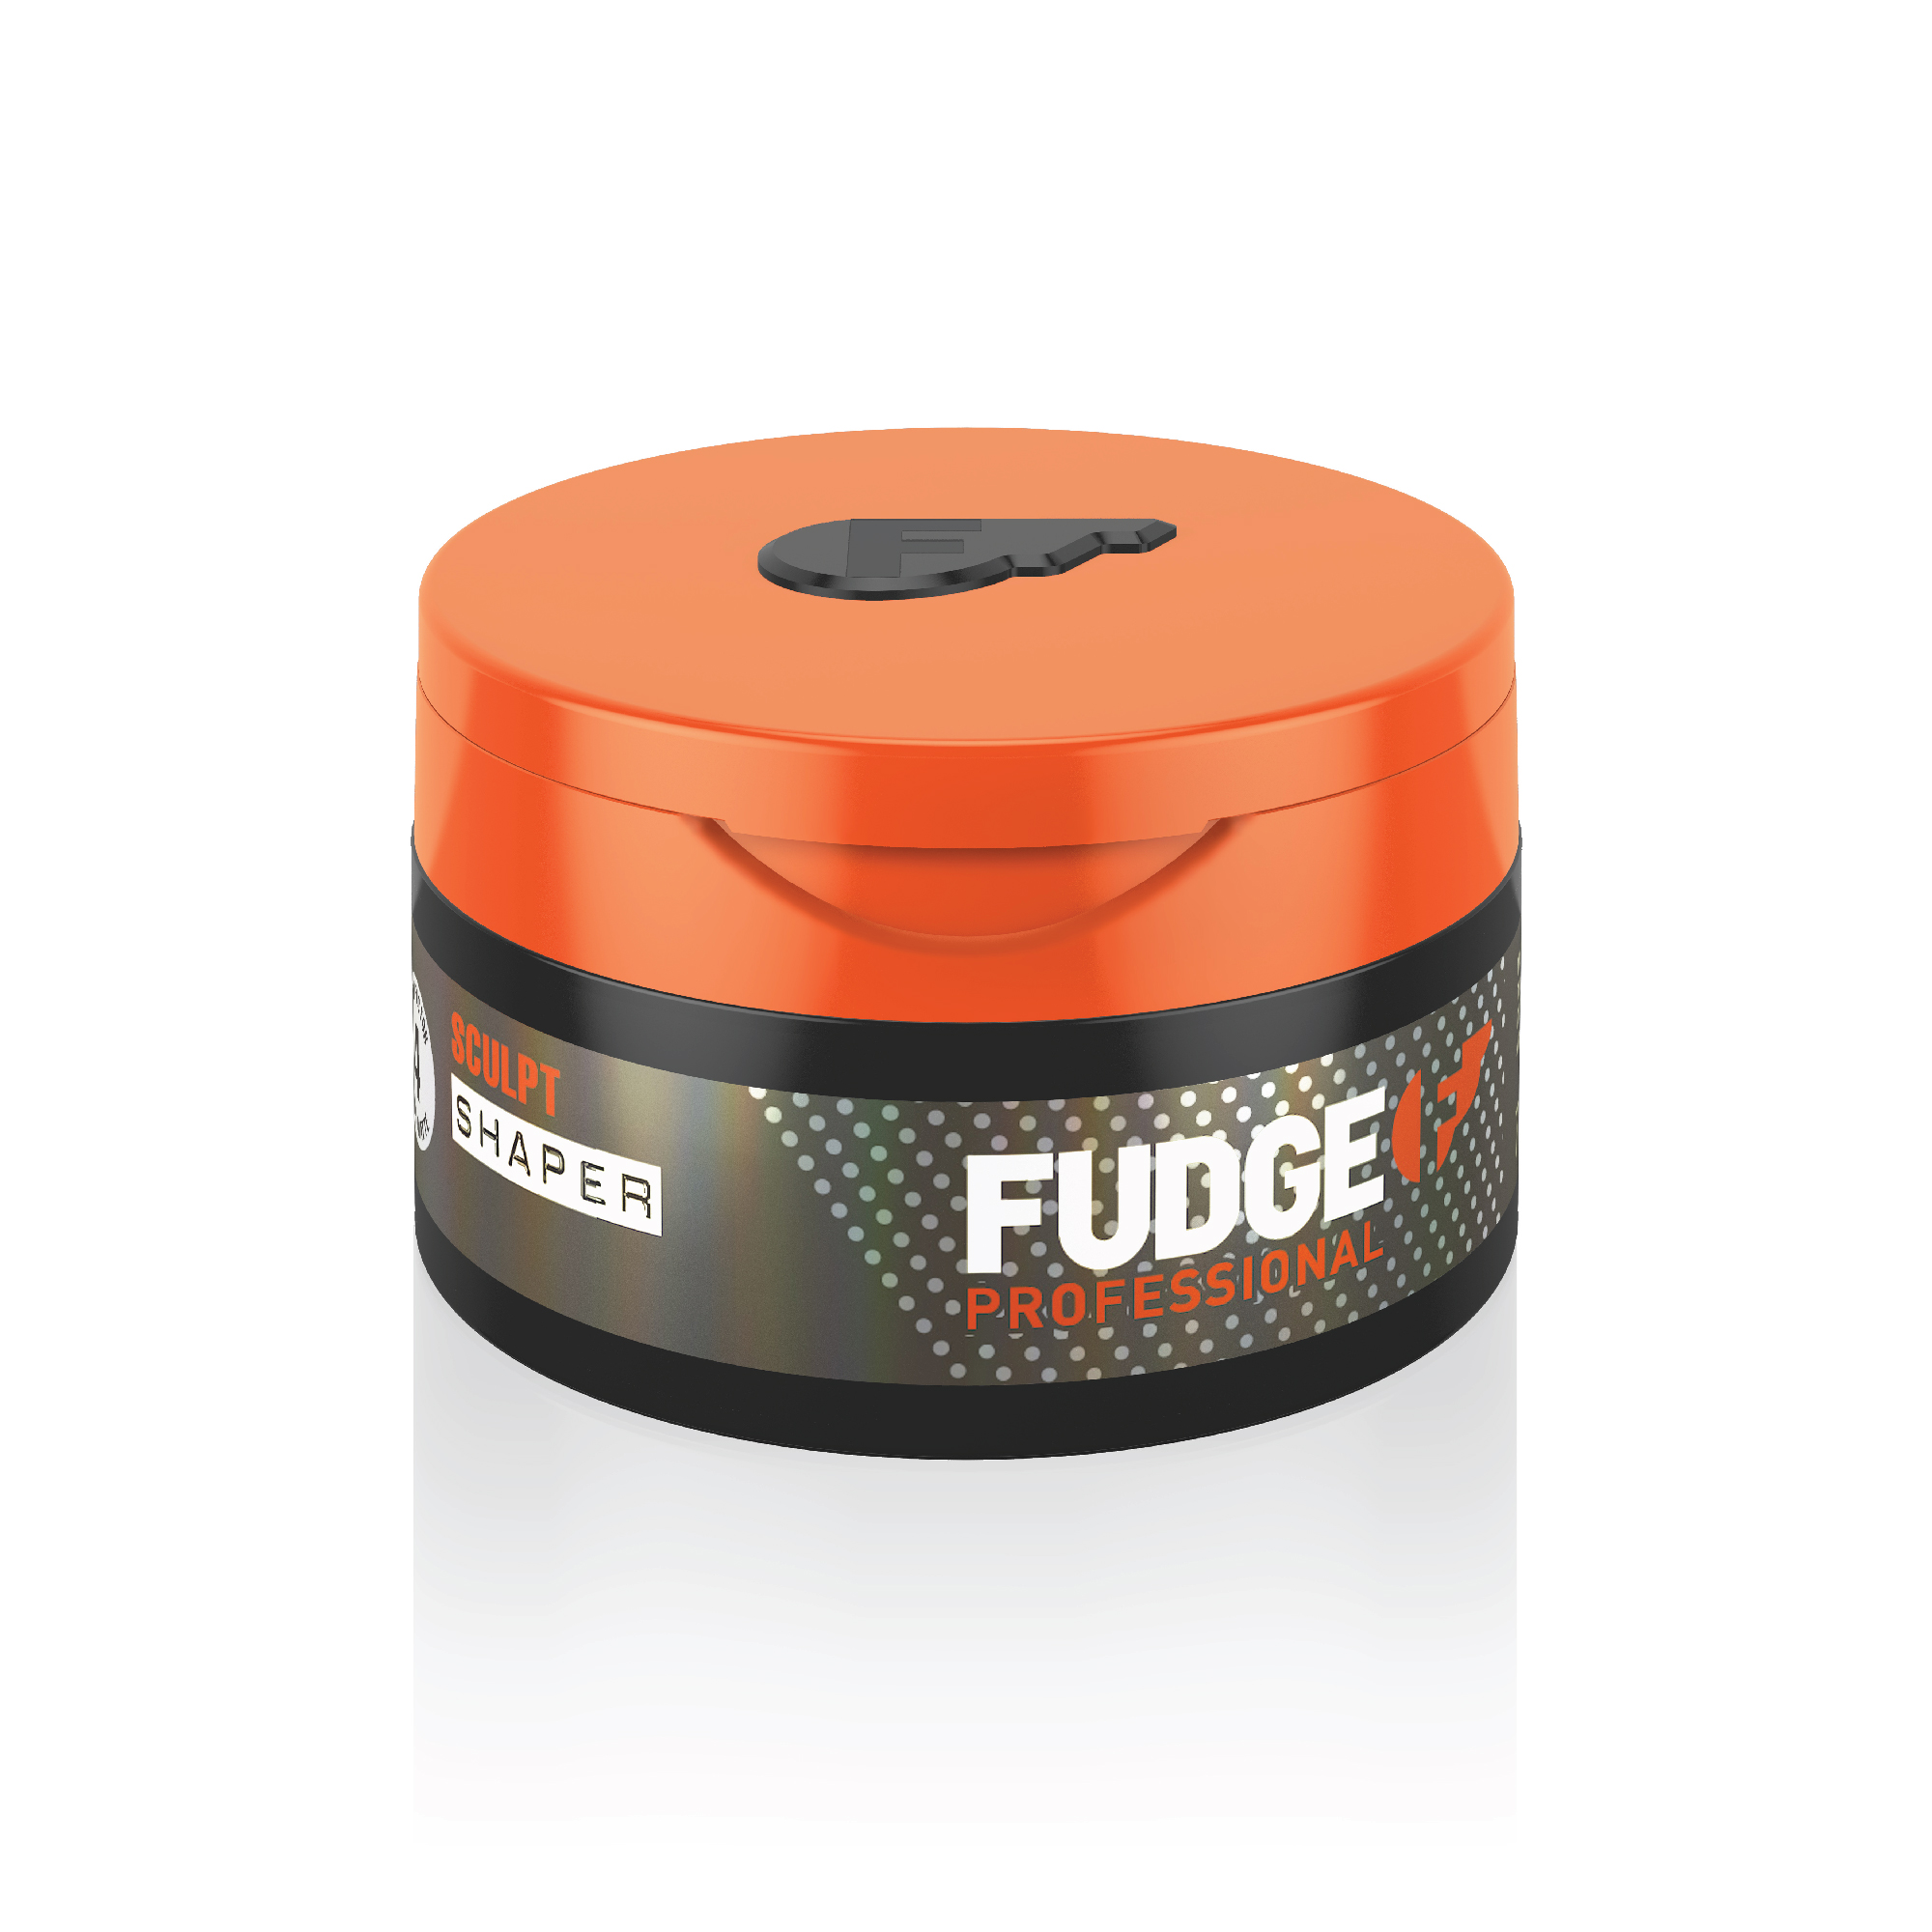 Fudge Shaper Original 75g - Hair products New Zealand